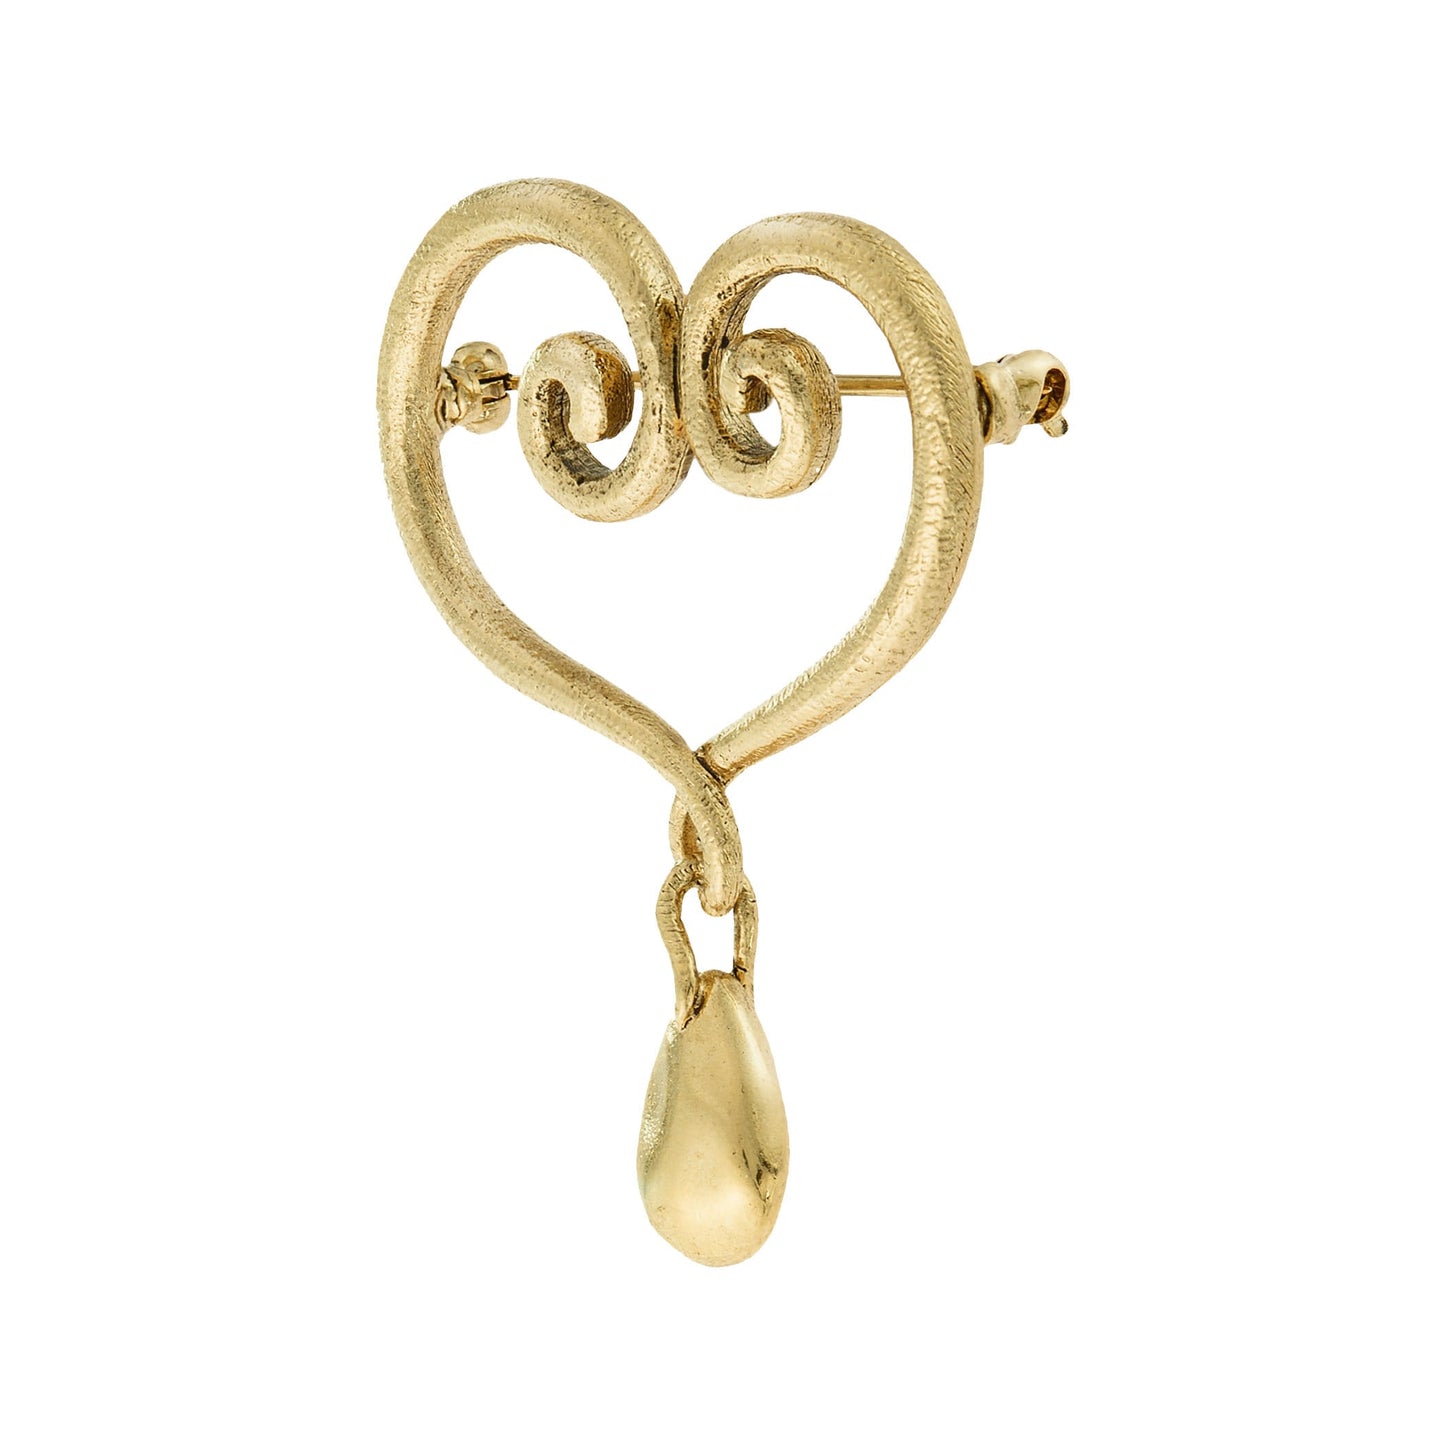 Oscar de la Renta Vintage Ring Swirl Pin OSP-HEART - Limited Stock - Never Worn